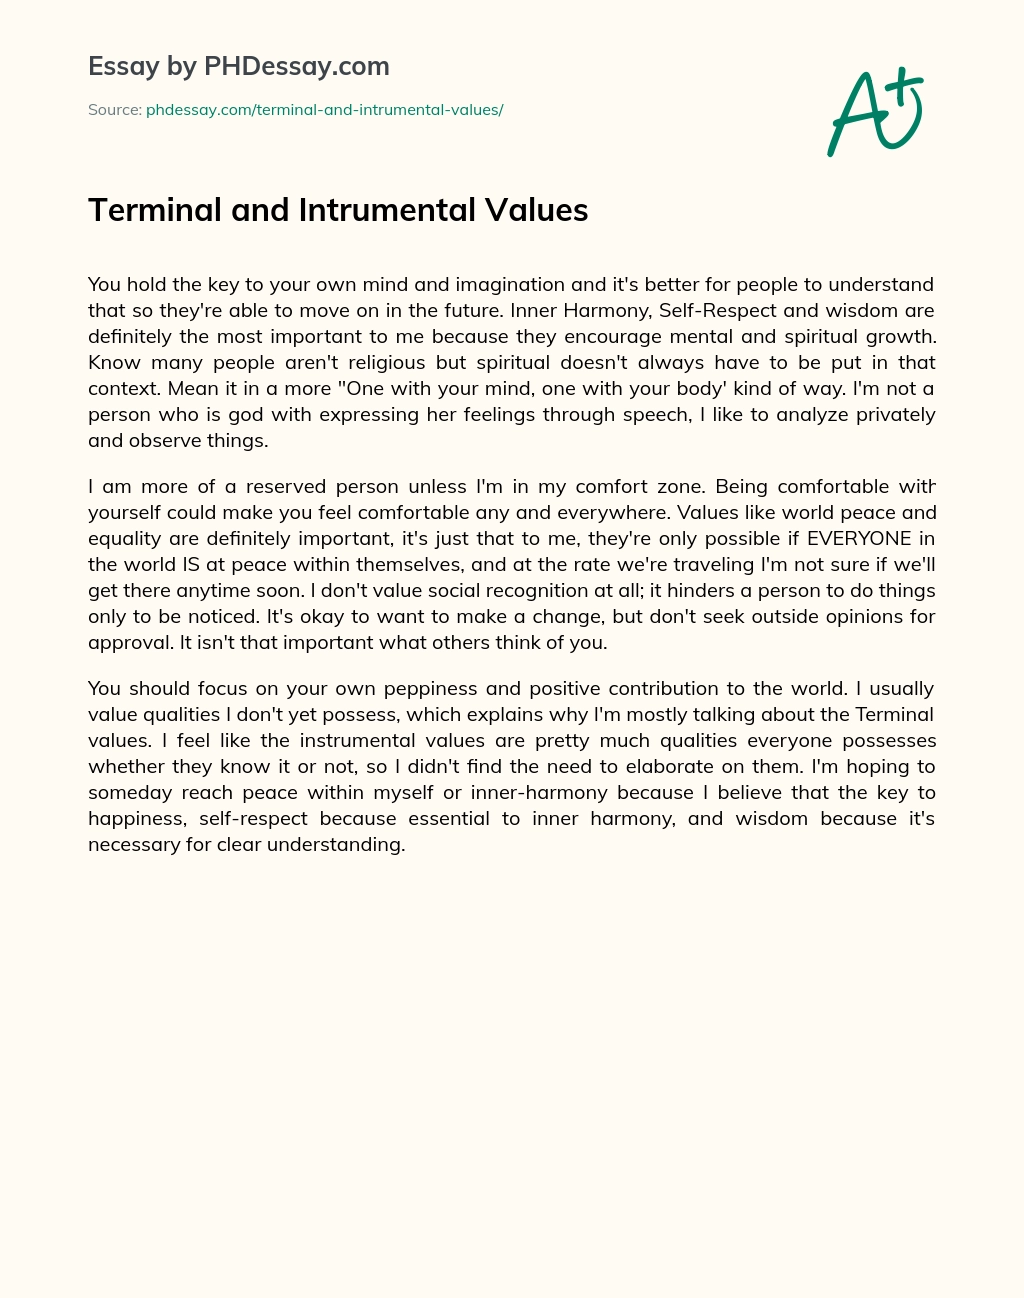 Terminal and Intrumental Values essay